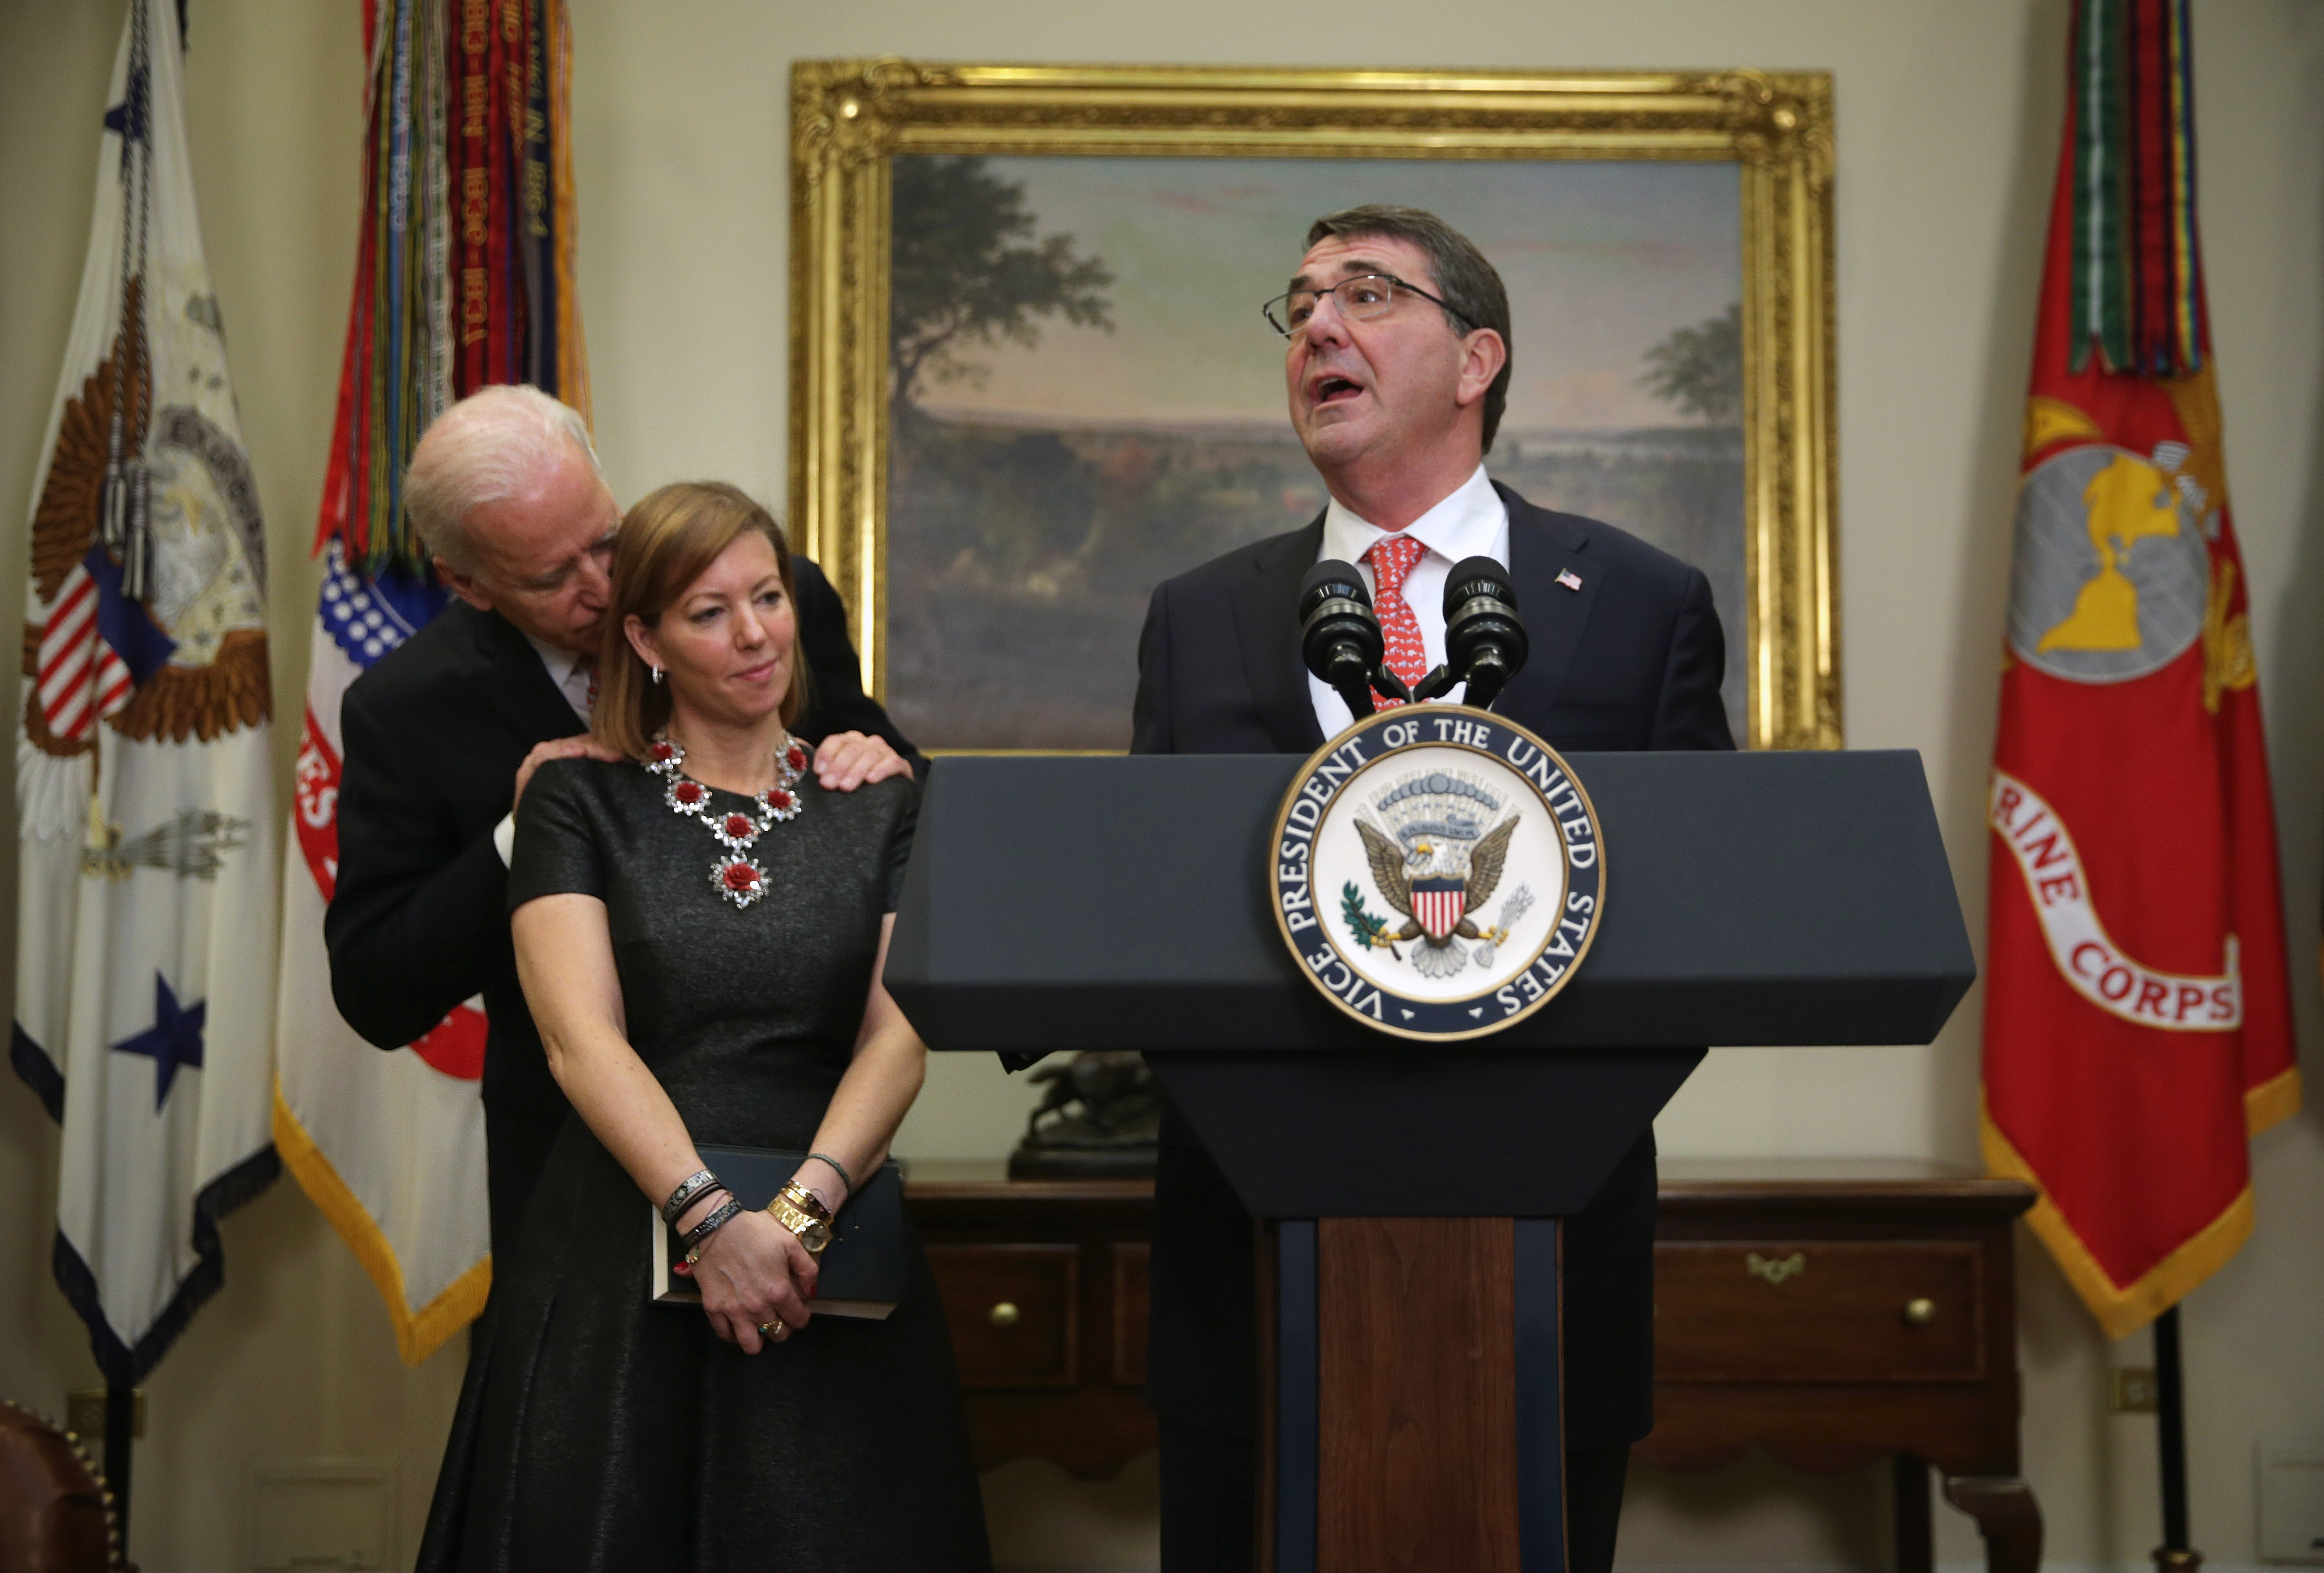 Joe Biden’s ‘close talking’ during ceremony goes viral